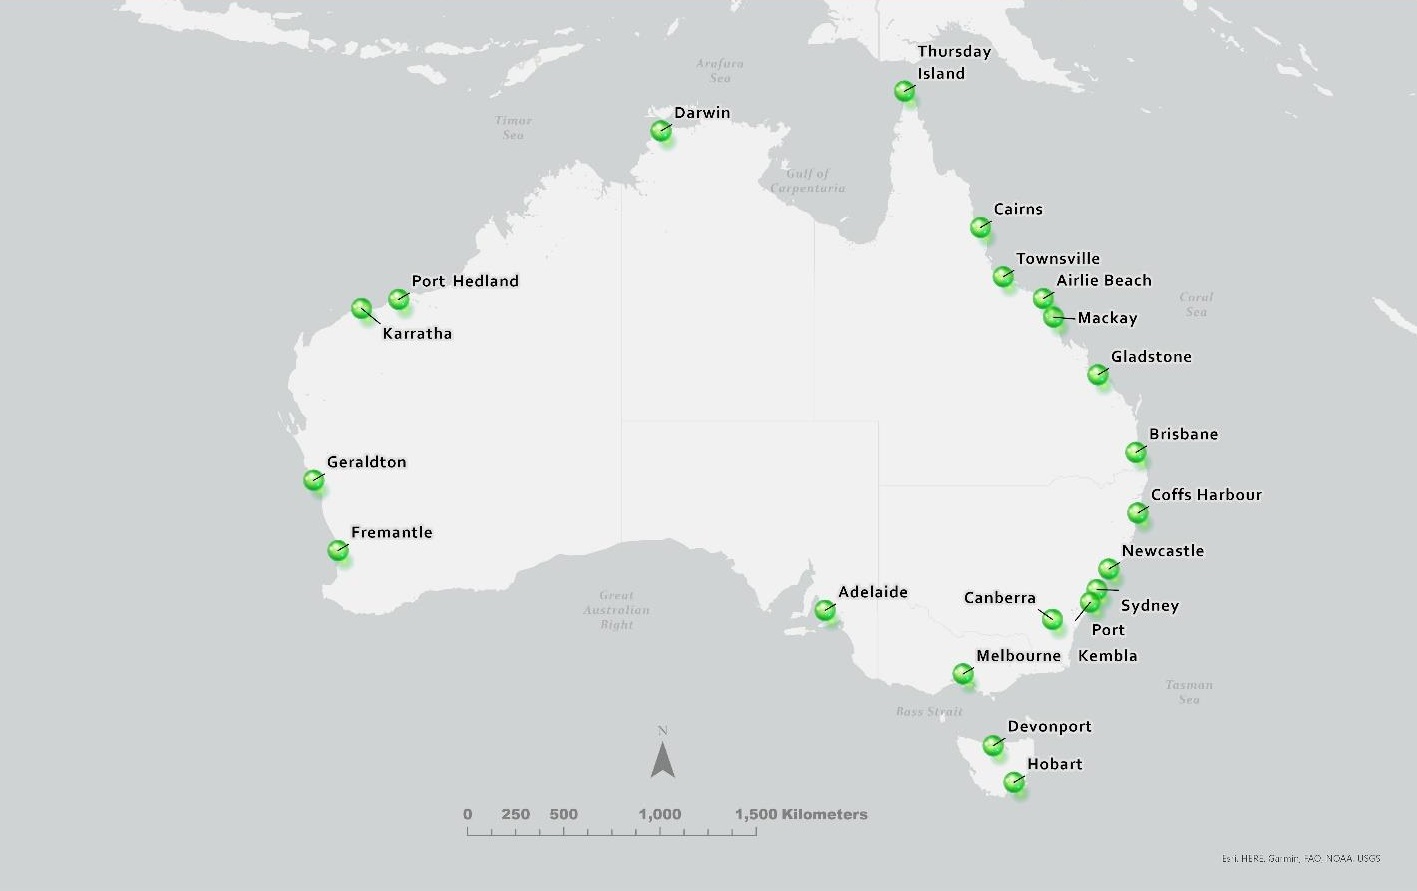 Map of Australia showing AMSA office locations - full list below